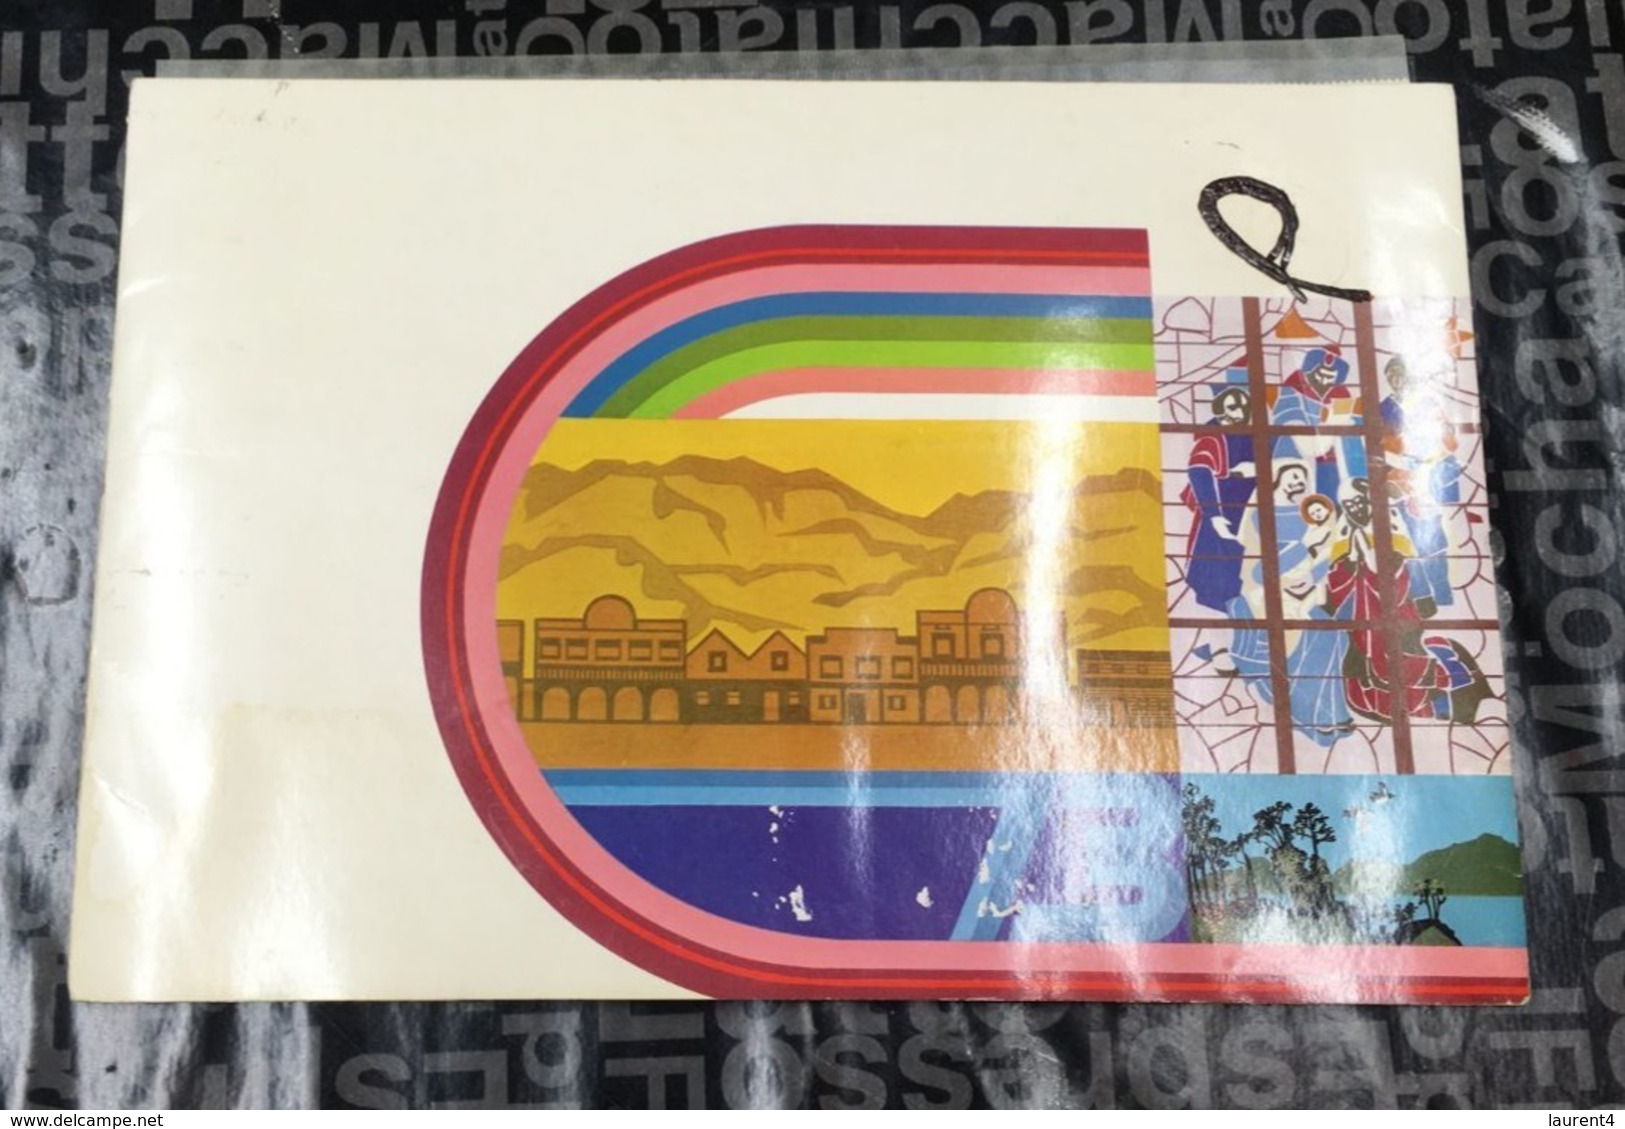 (stamps 8/8/2020) Canada - 1973 Presentation Folder With Stamp + Extra Page (as Seen) - Jahressätze Der Kanad. Post